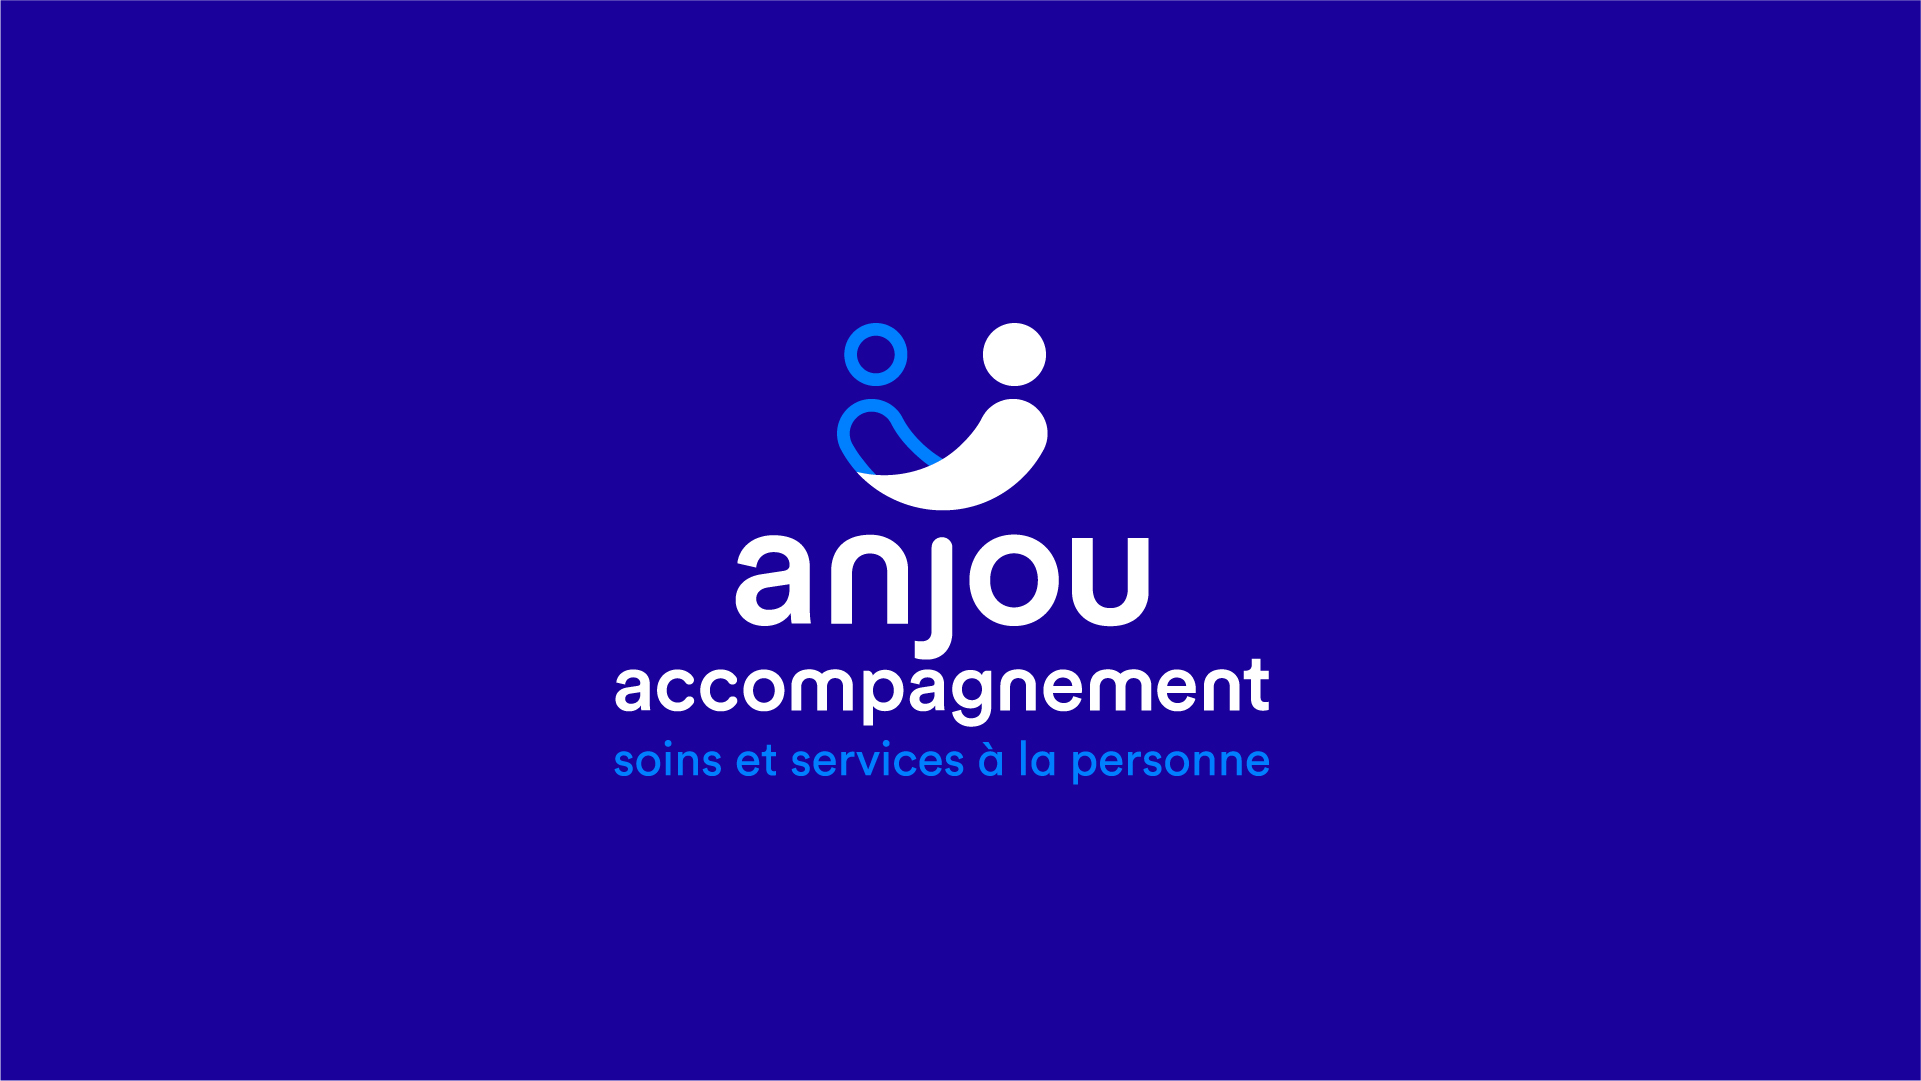 Anjou accompagnement association identite visuelle logotype